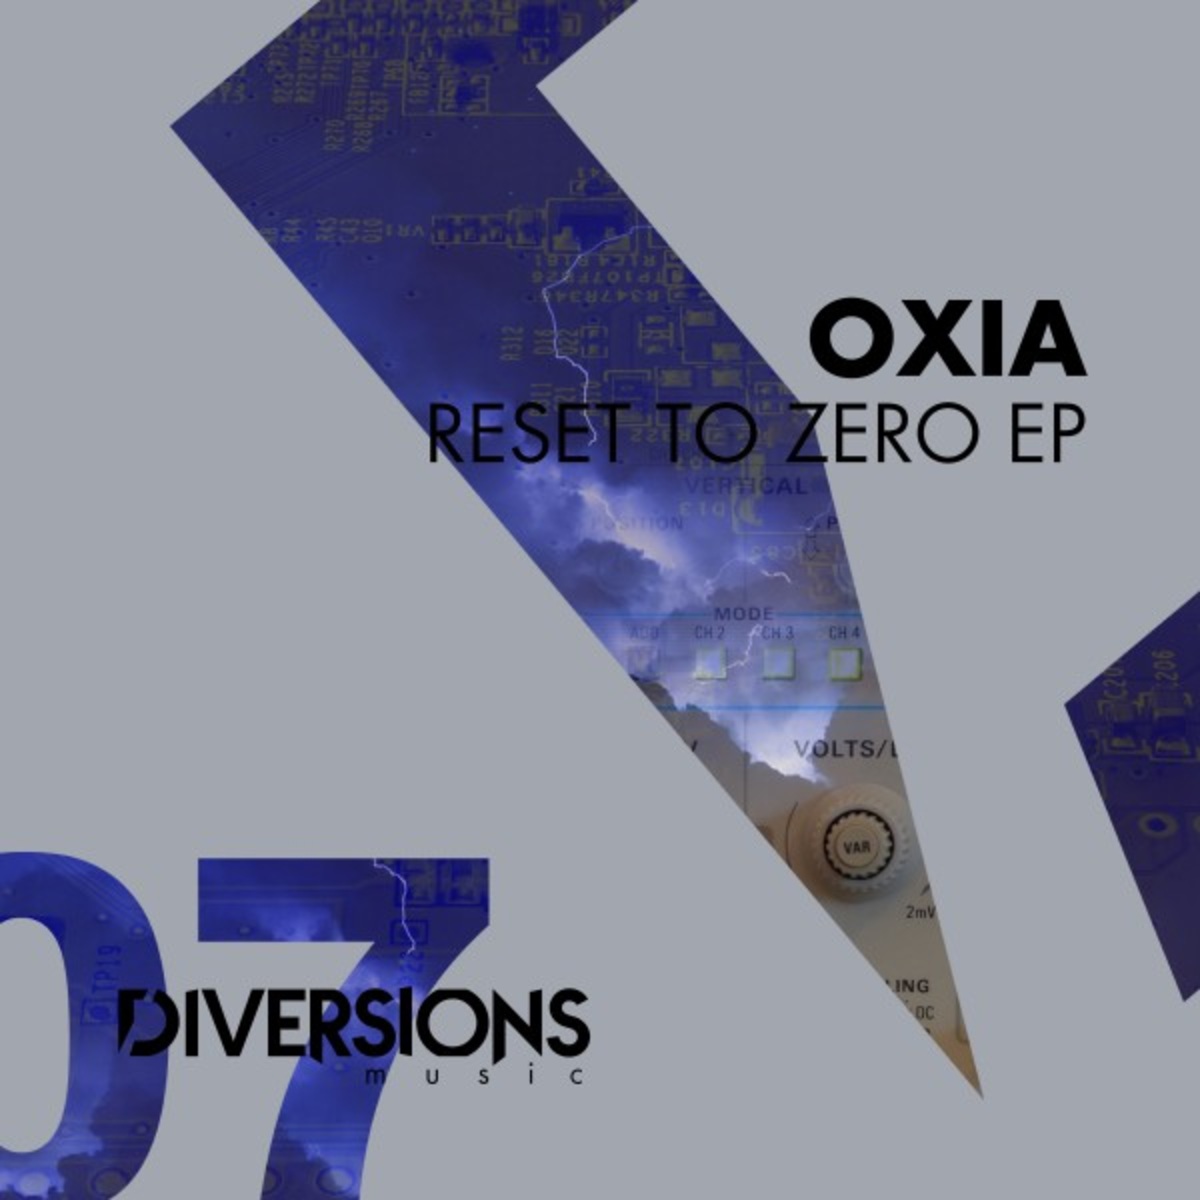 Oxia - Reset to Zero EP / Diversions Music